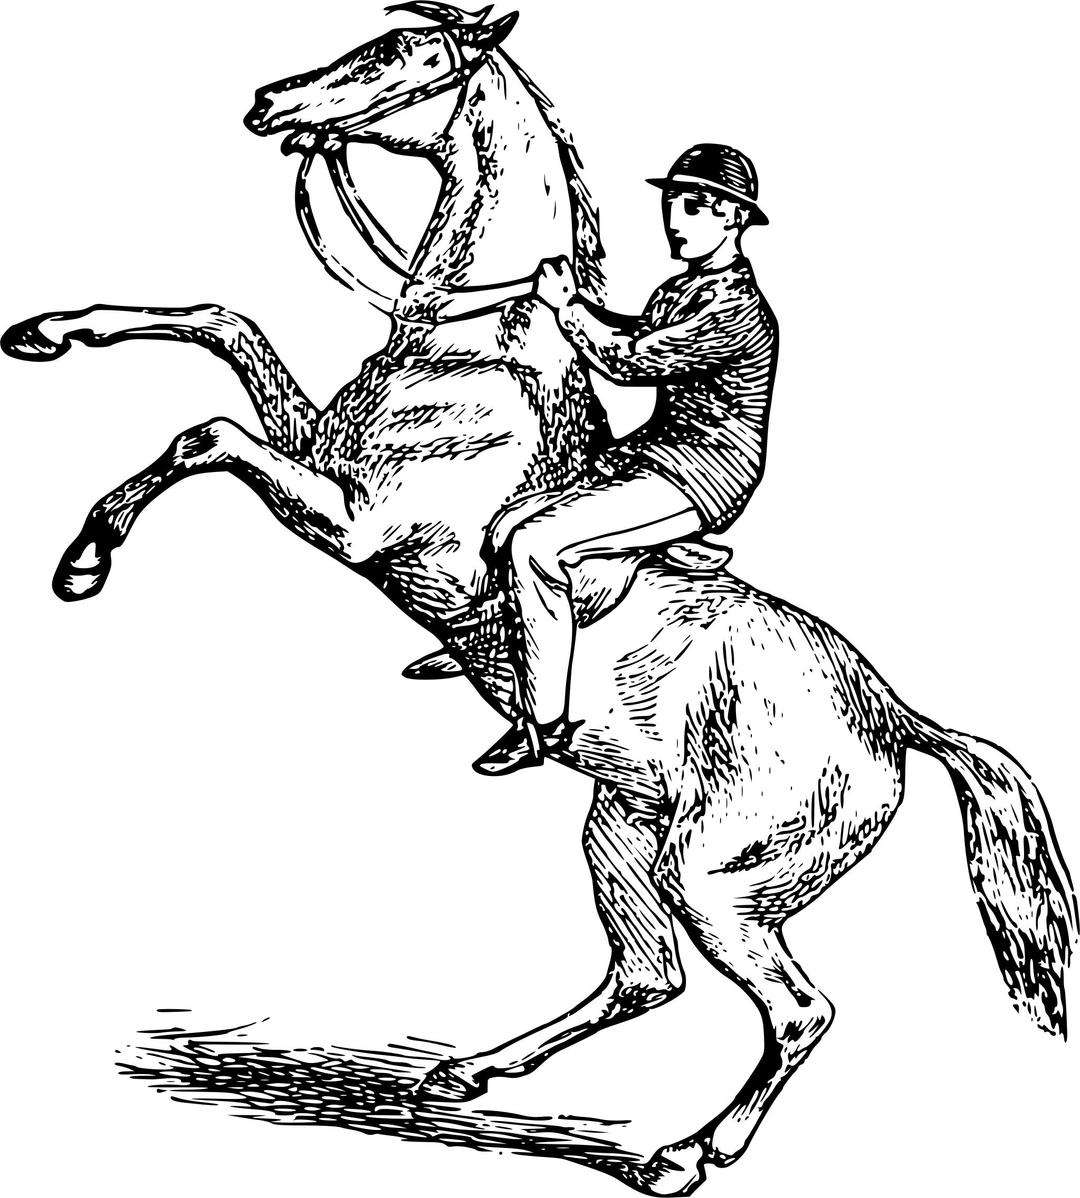 Man riding a rearing horse png transparent